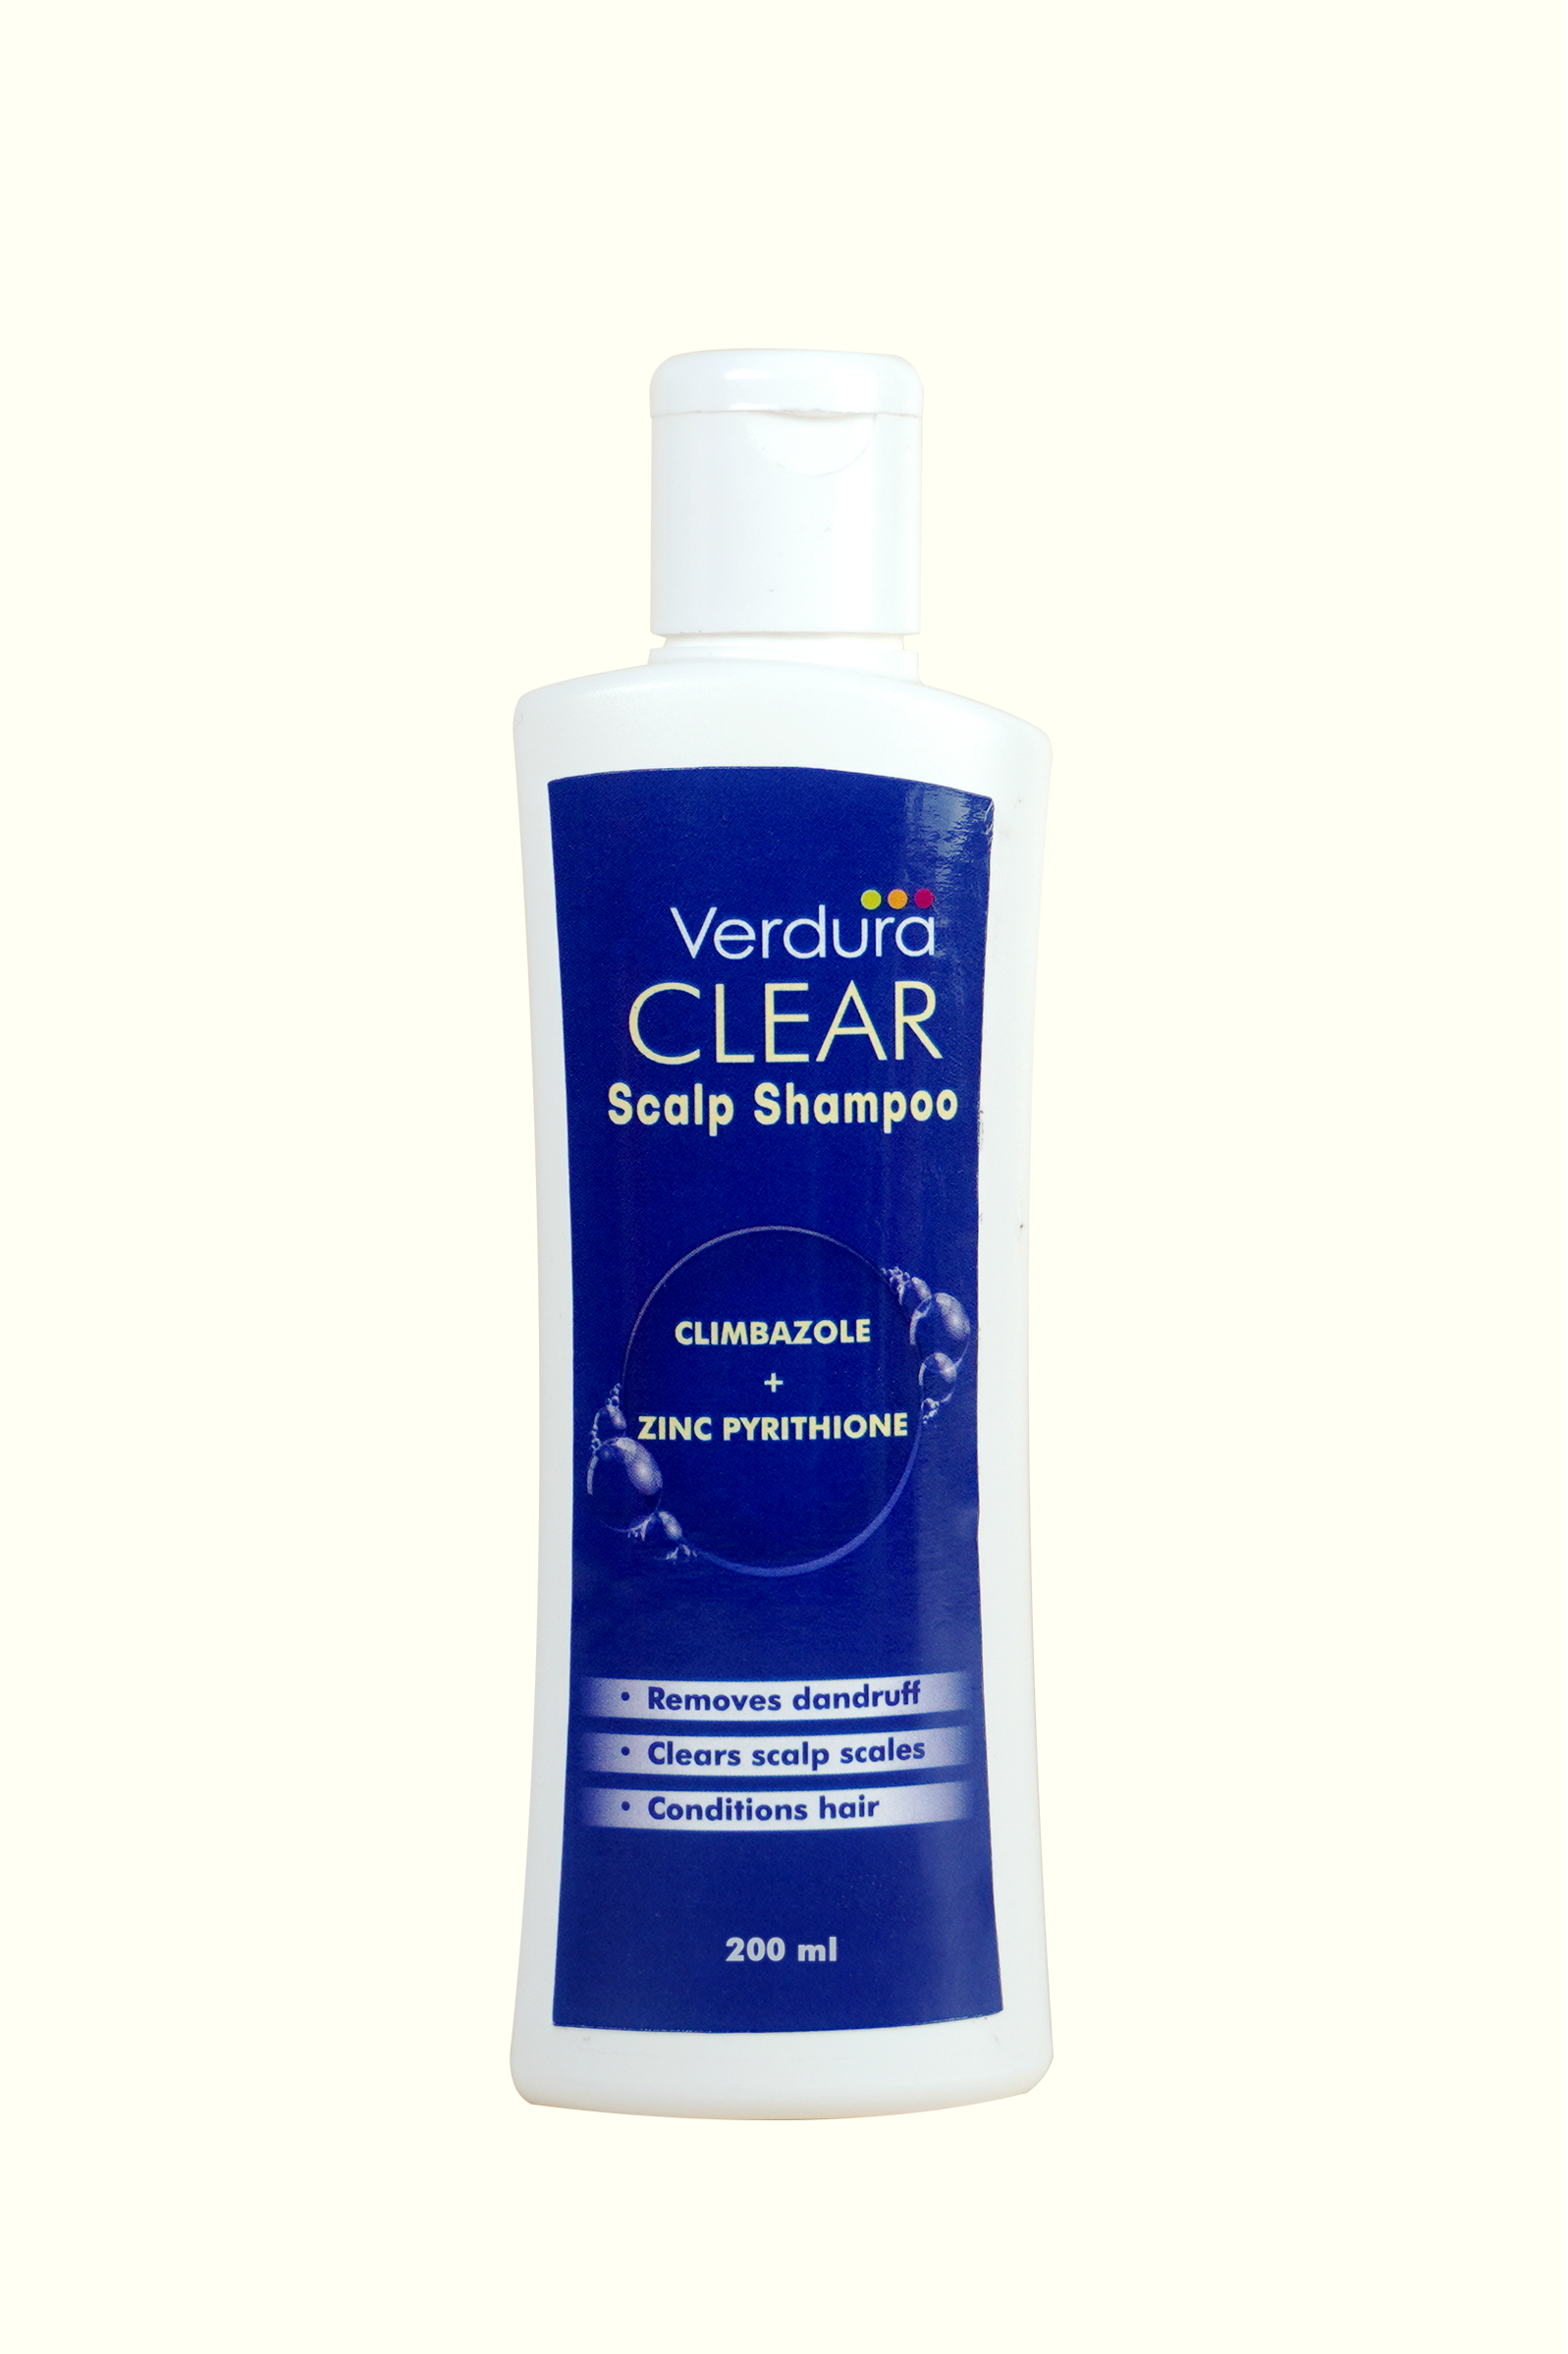 Dr. JRK's Verdura Clear Scalp Shampoo